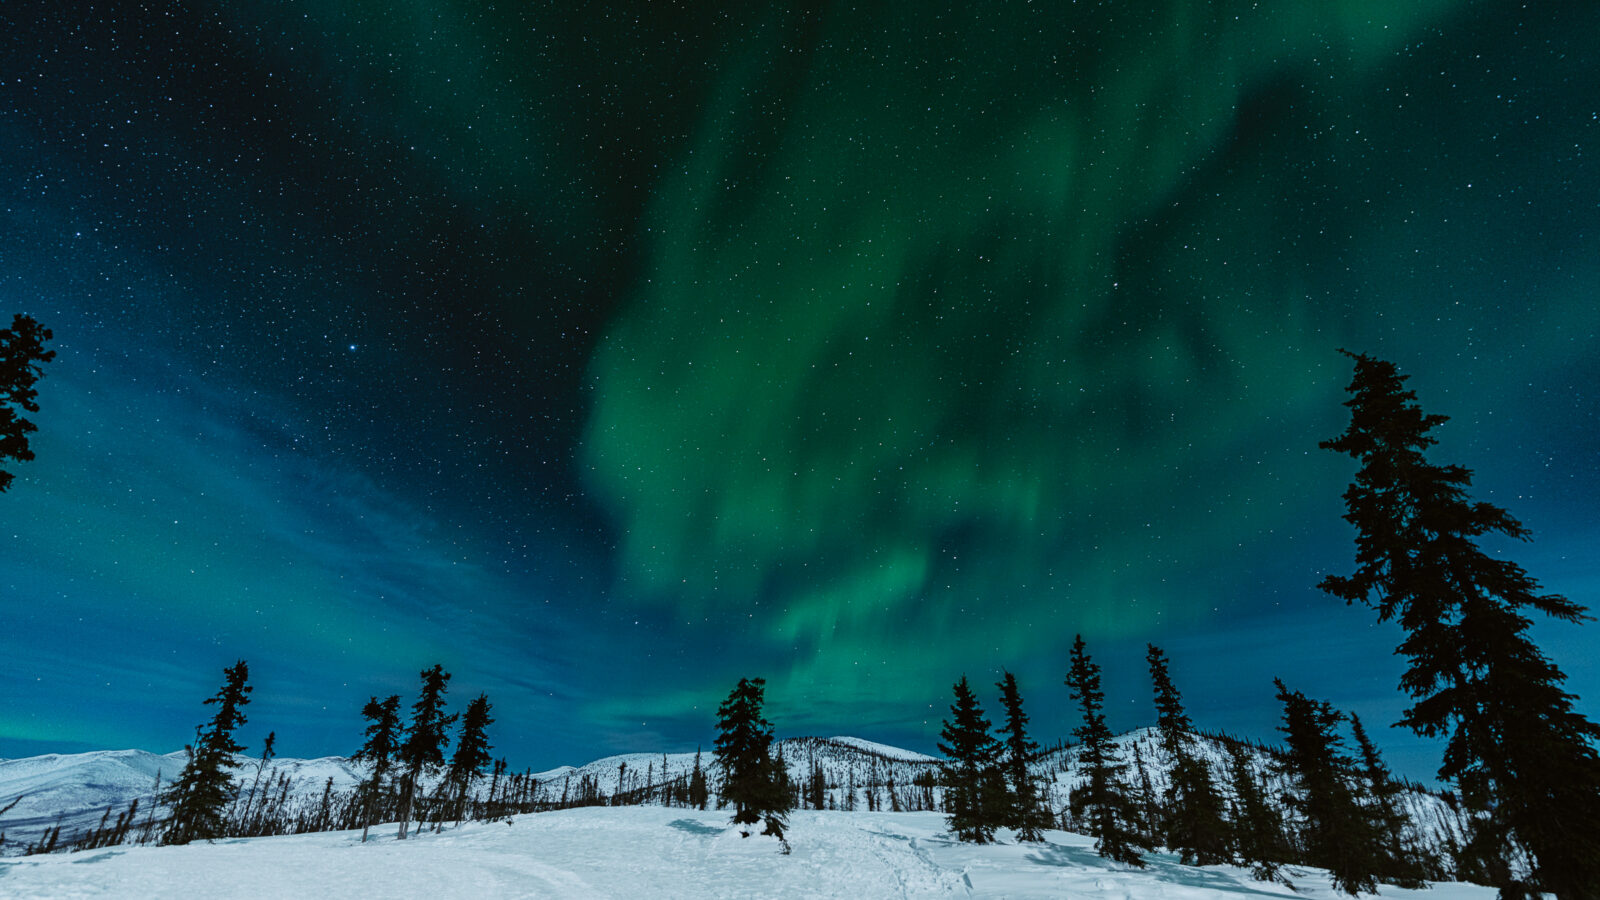 Elope in Alaska under the Northern Lights